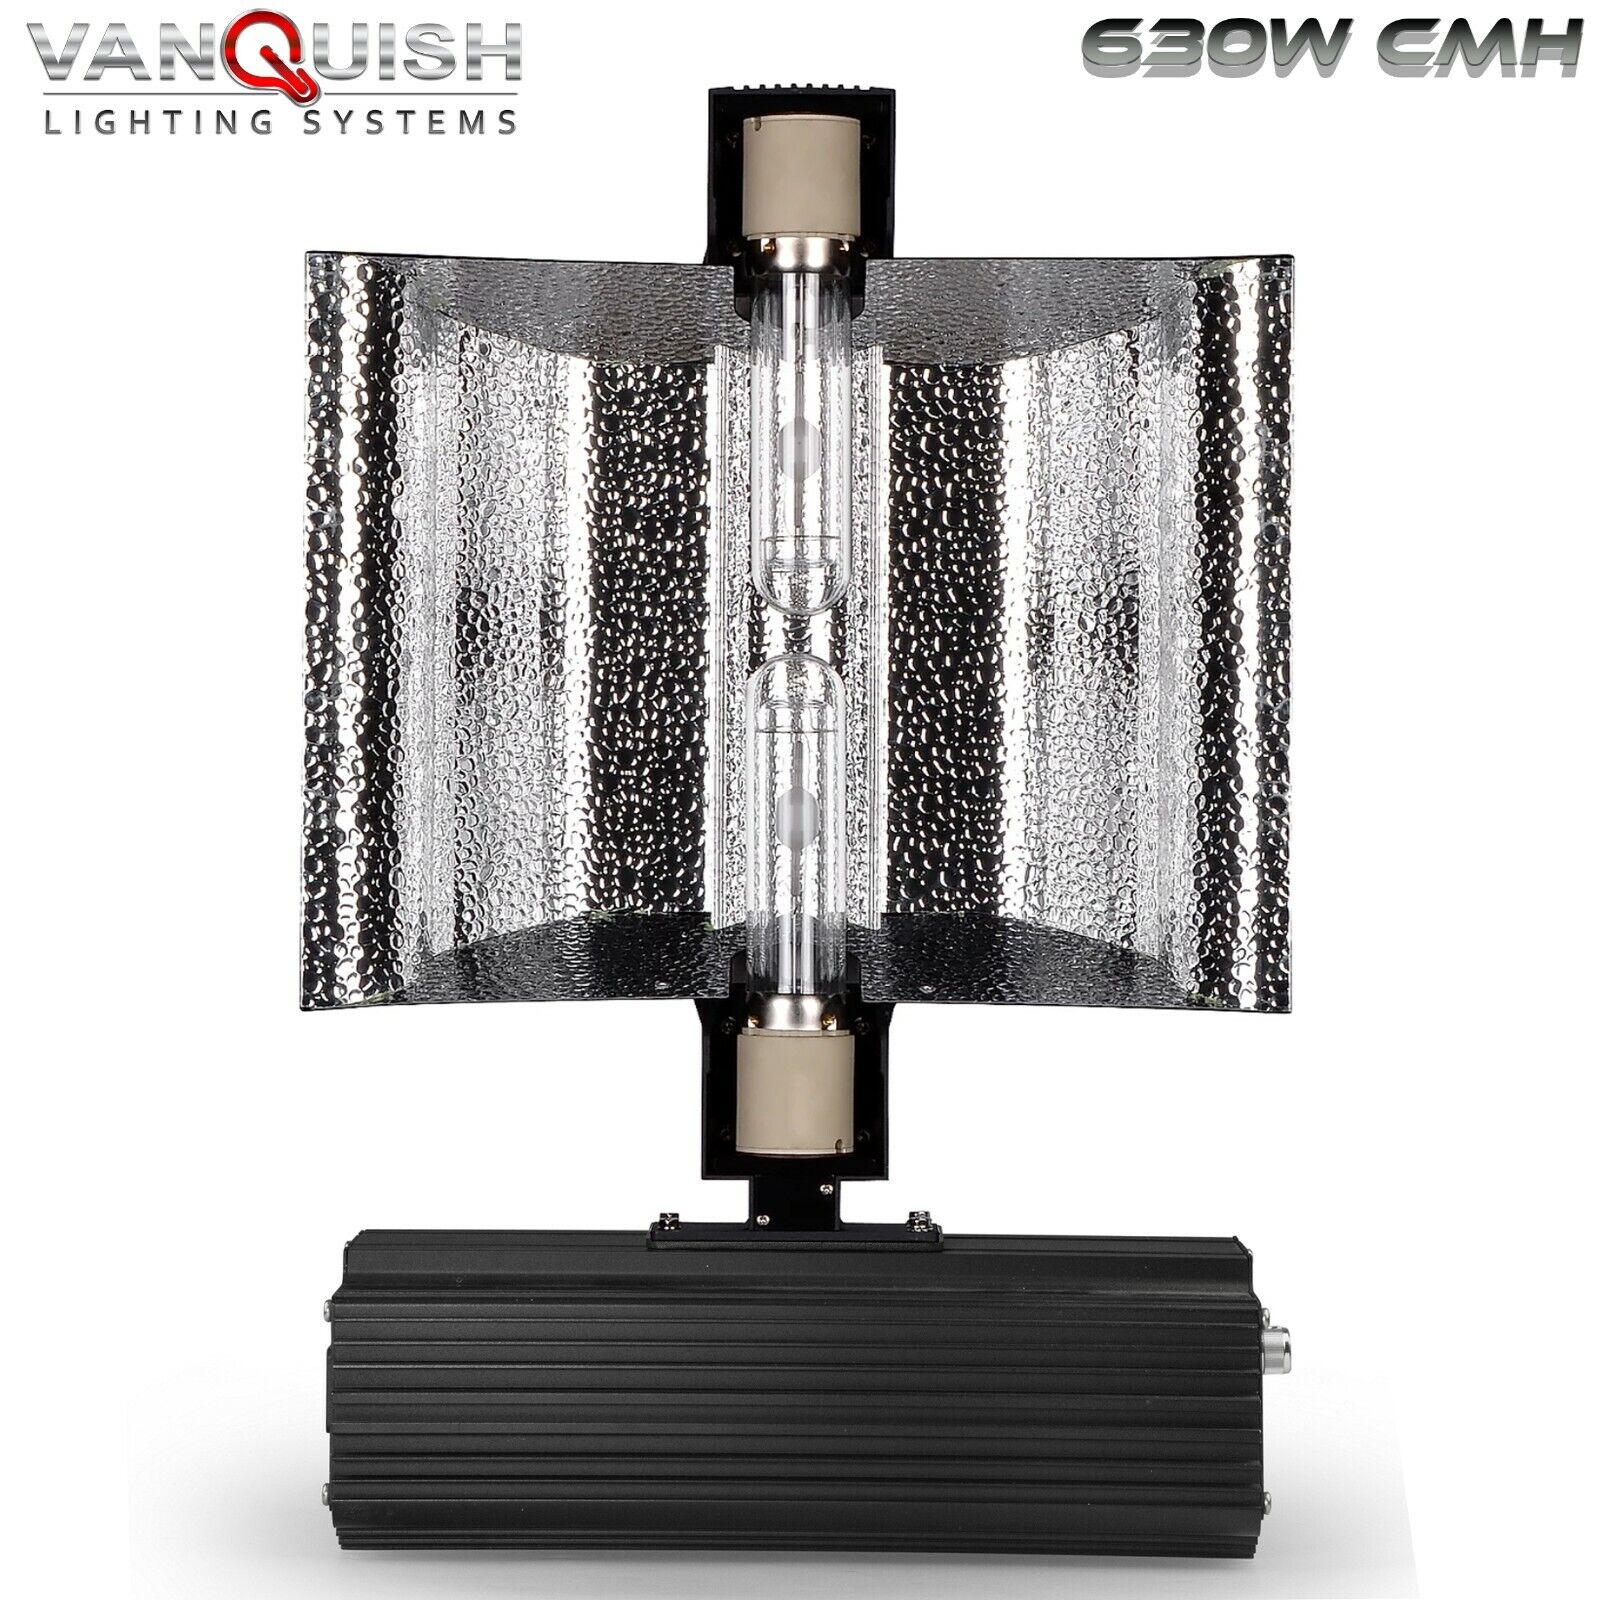 Vanquish 630w CMH system indoor grow light Commercial 3k Or 4K Bulbs